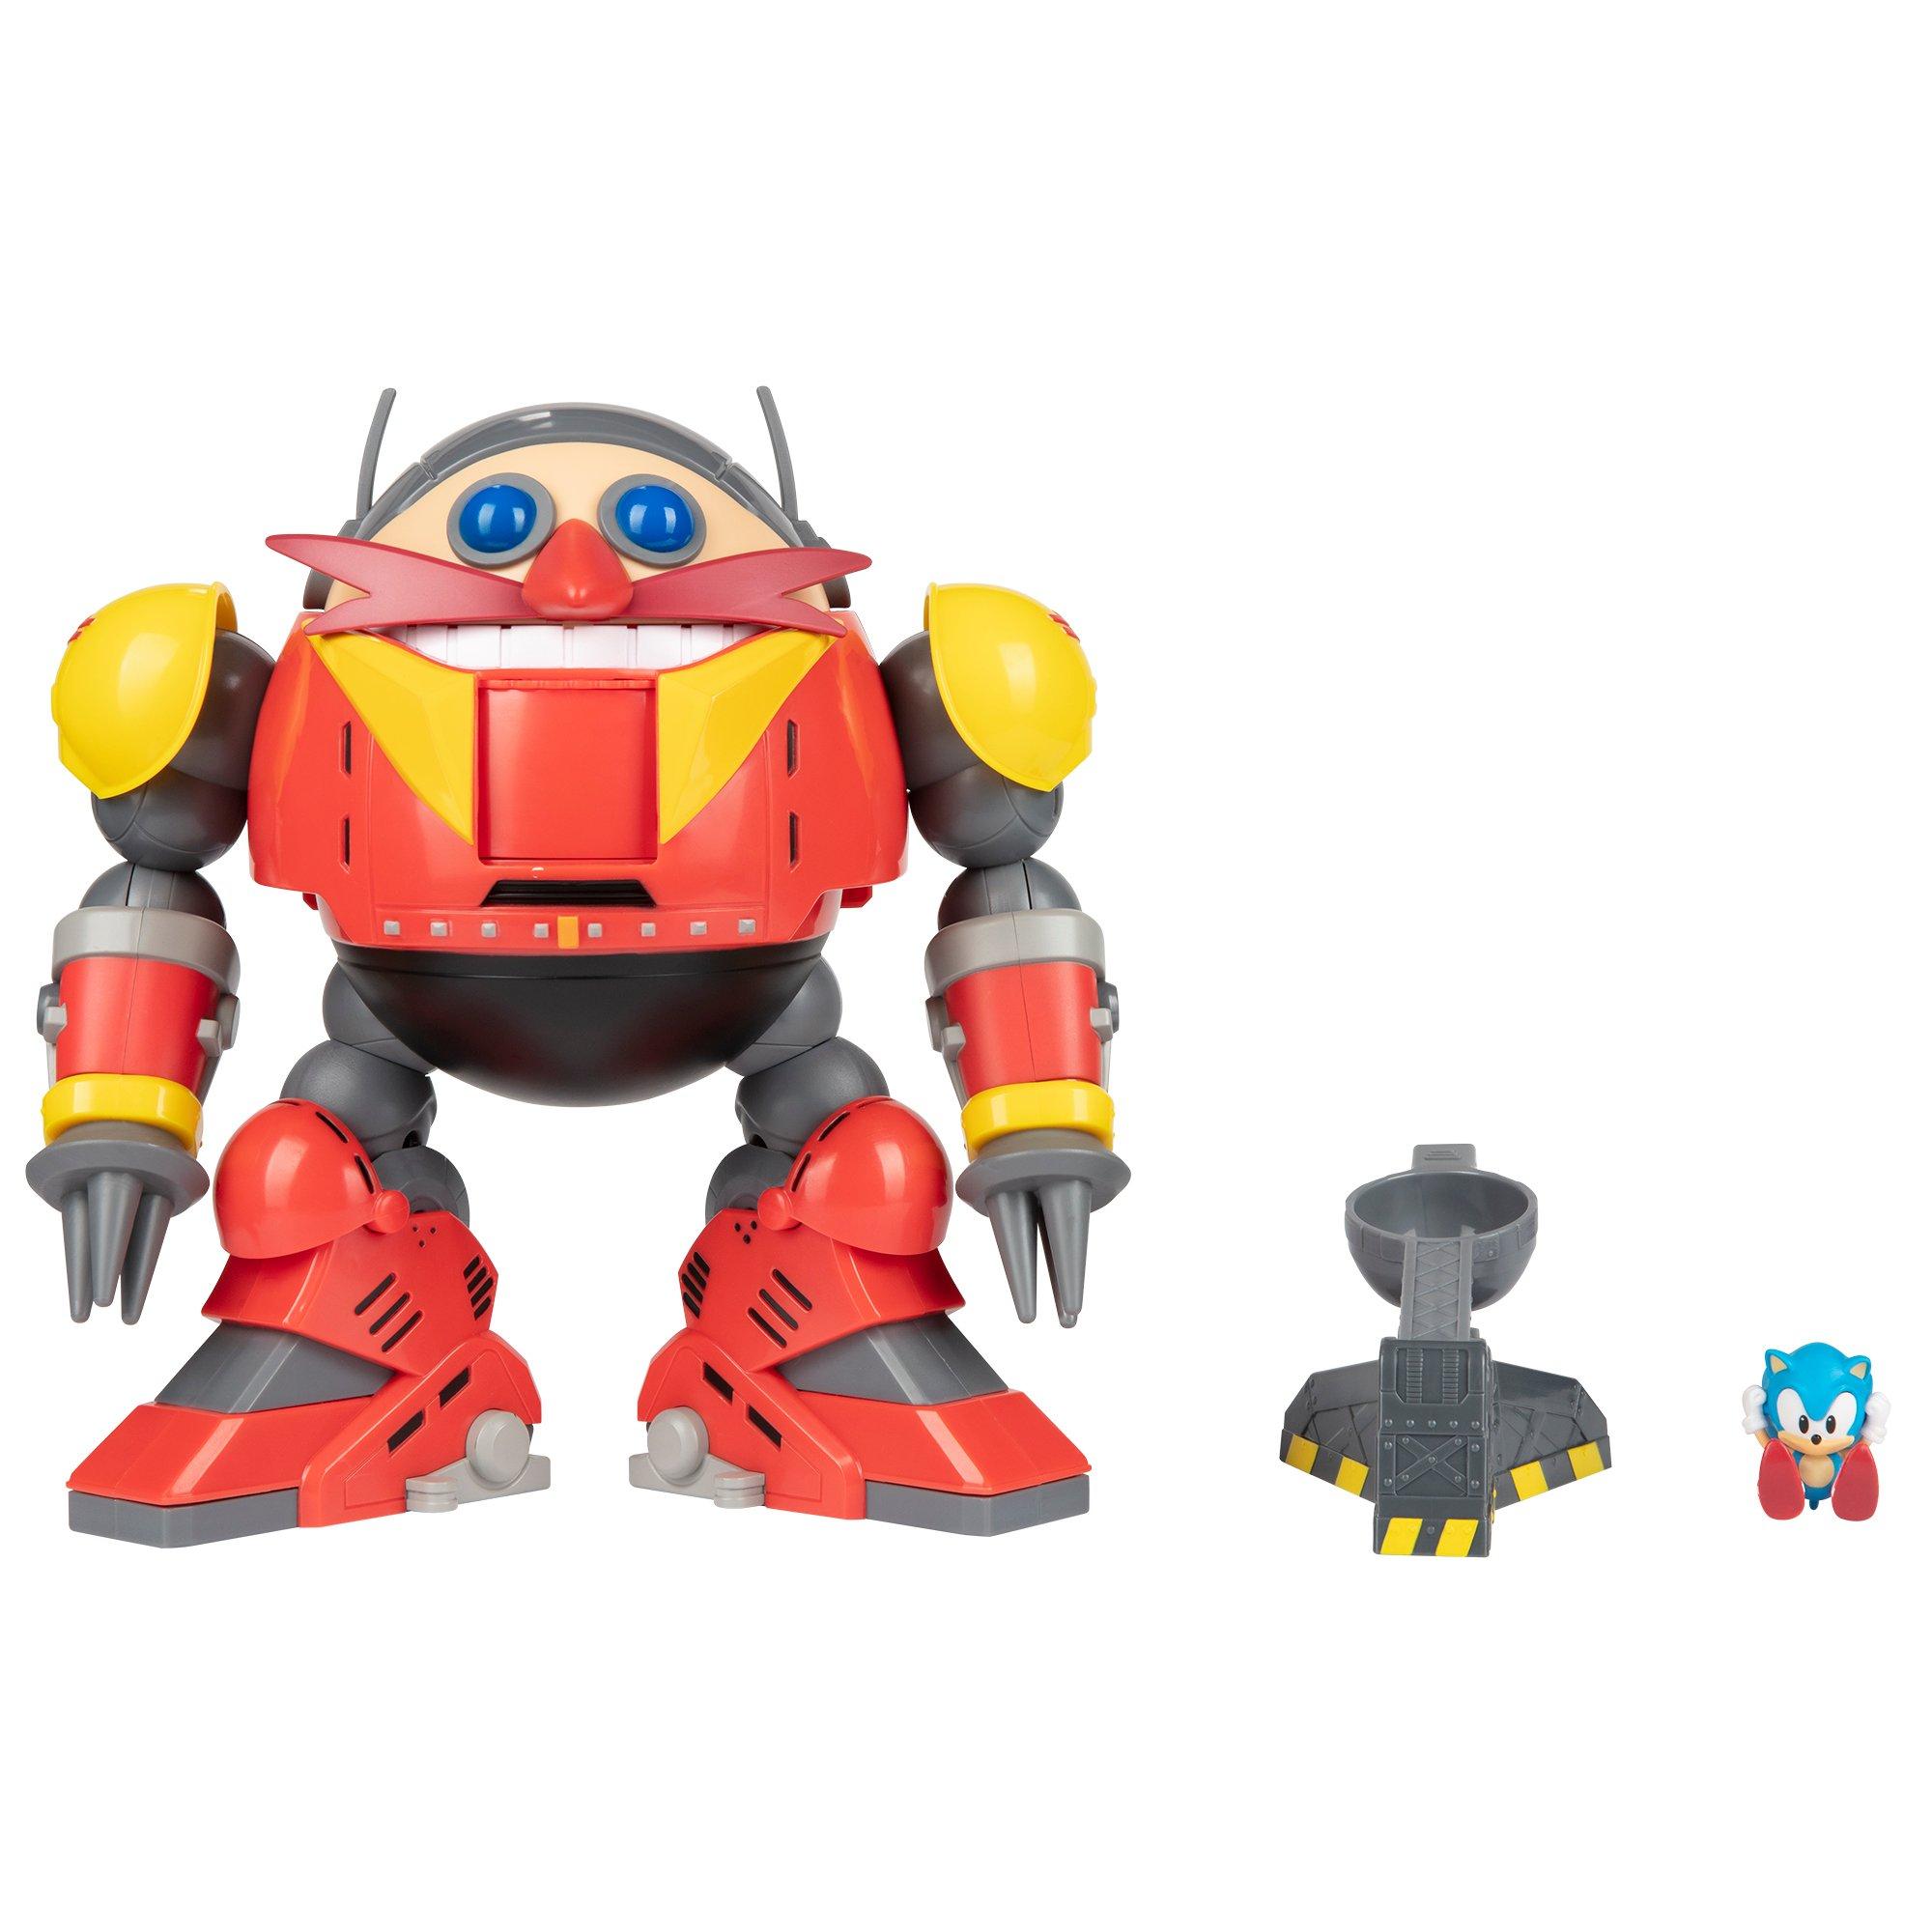 https://media.gamestop.com/i/gamestop/11121182_ALT04/Sonic-the-Hedgehog-Giant-Eggman-Robot-Figure-Battle-Set?fmt=auto